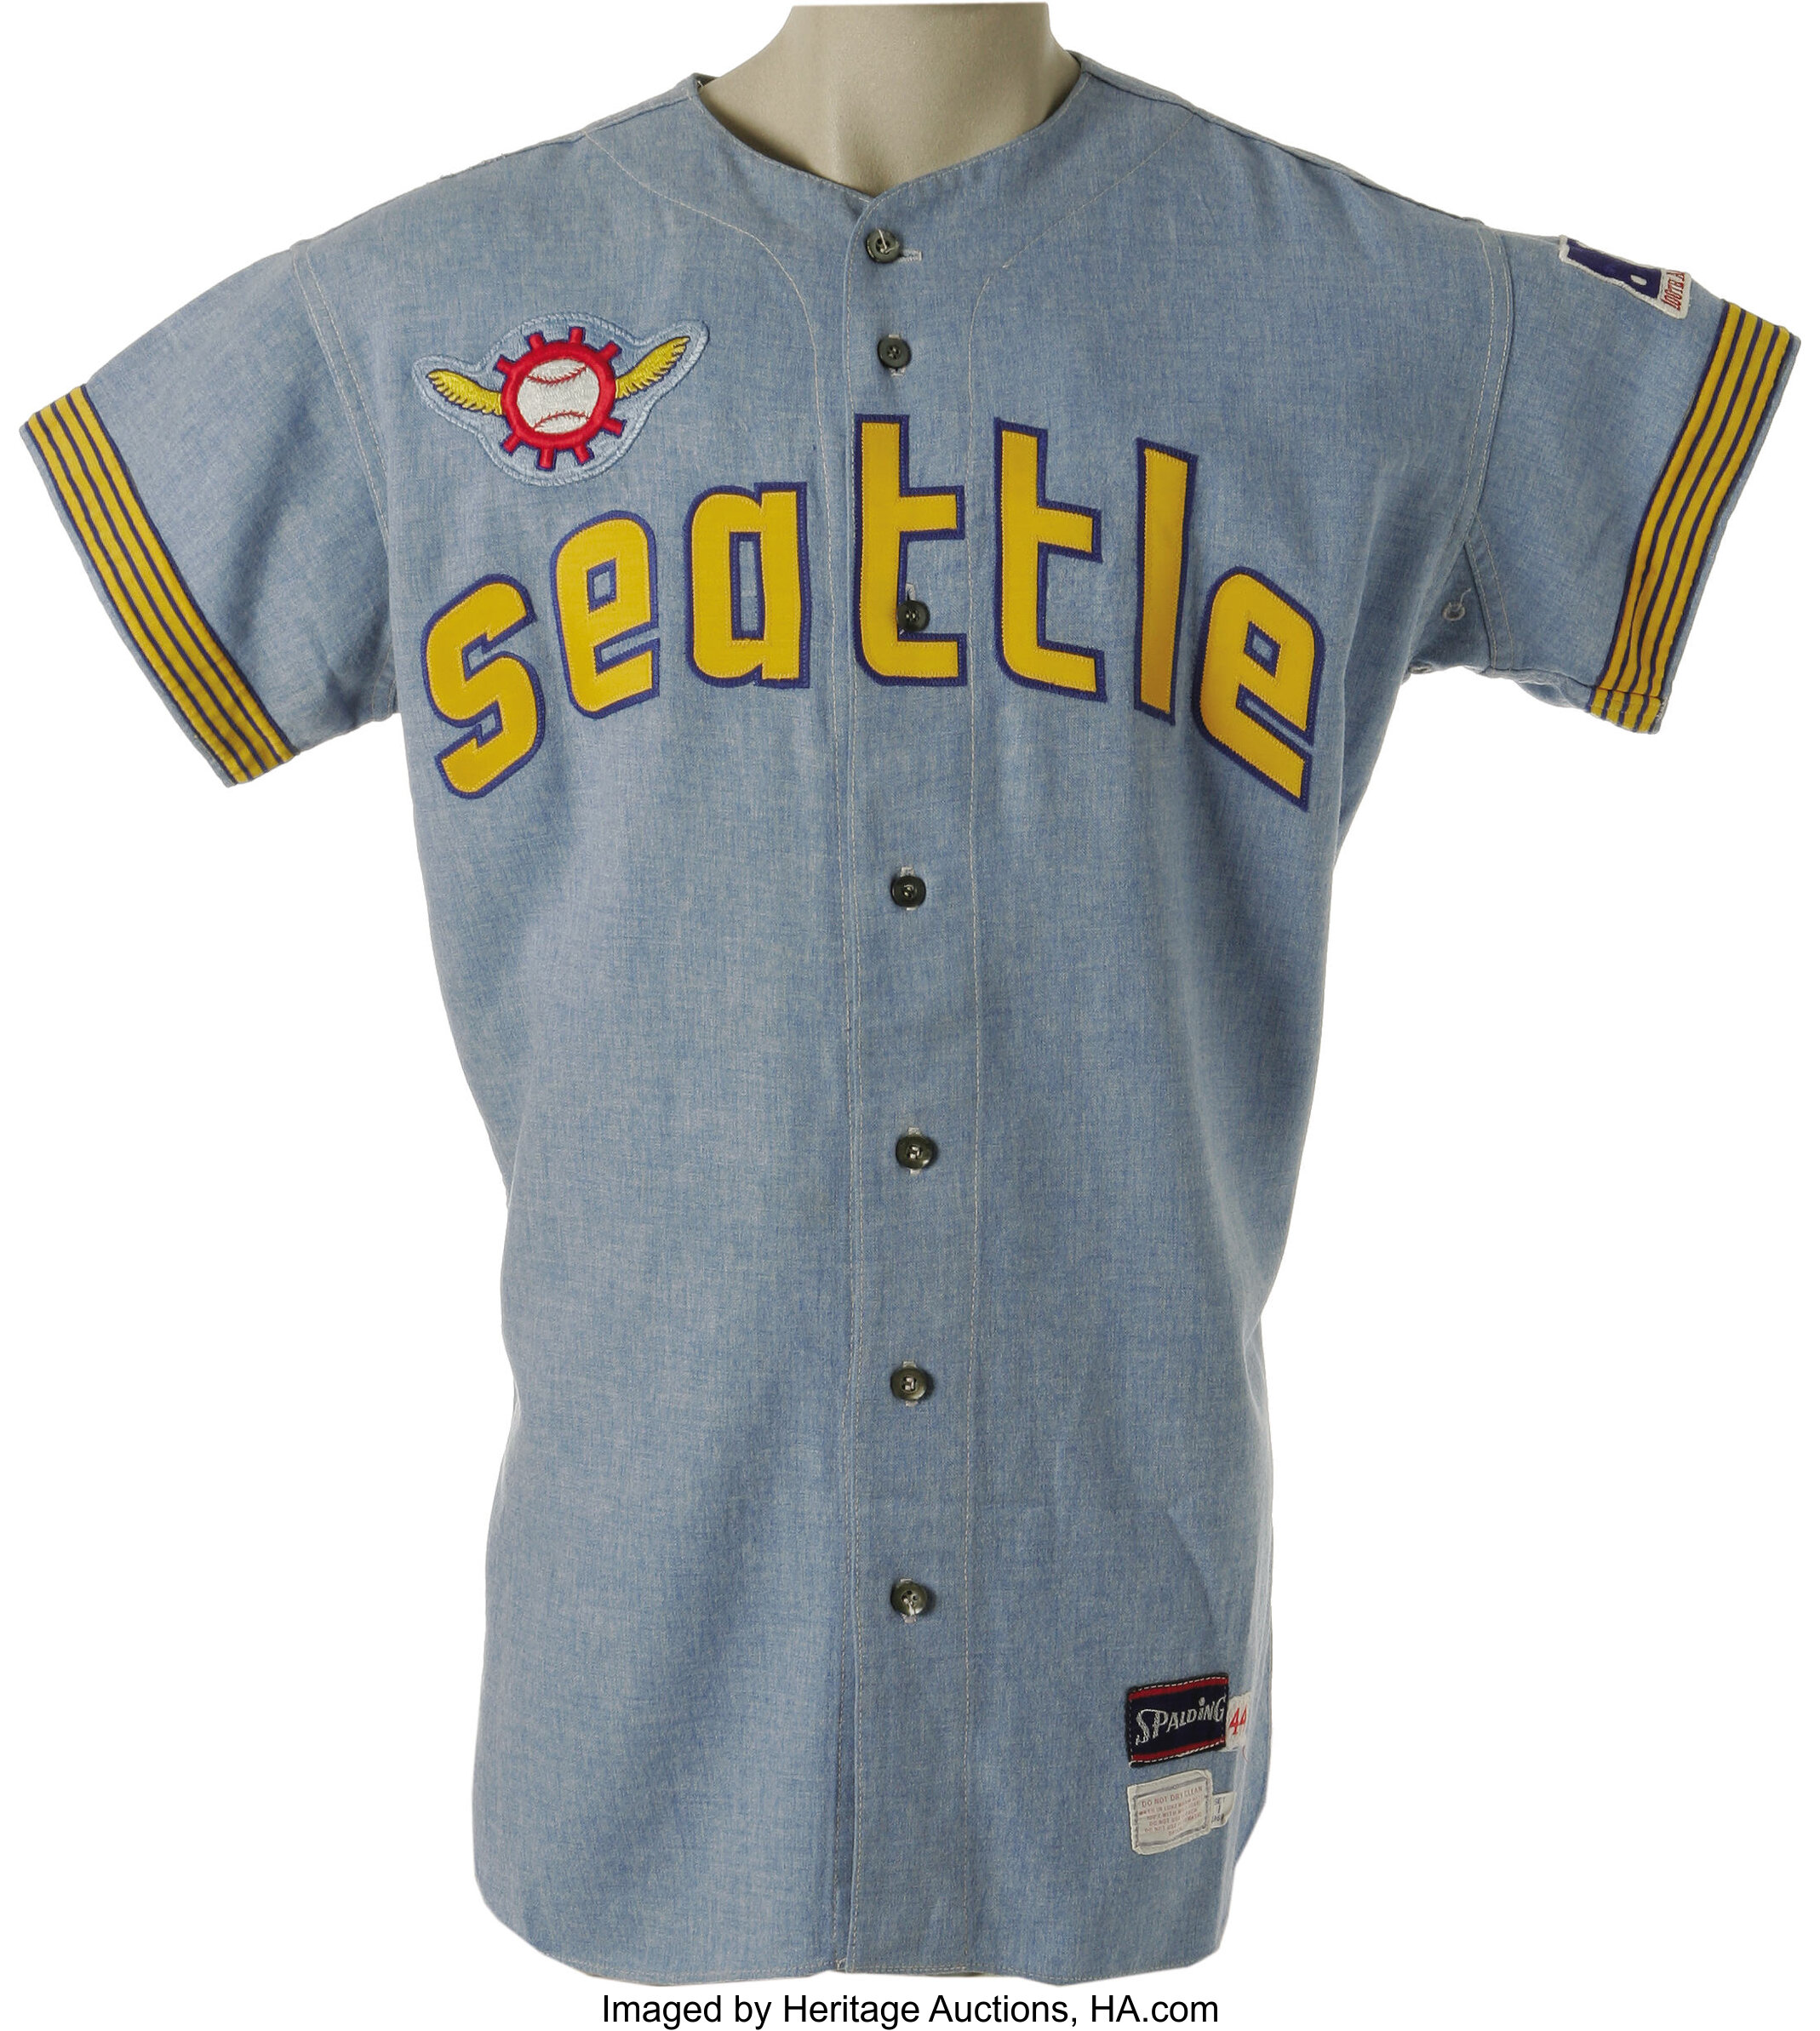 BaseballHistoryNut on X: I loved the Seattle Pilots uniform https